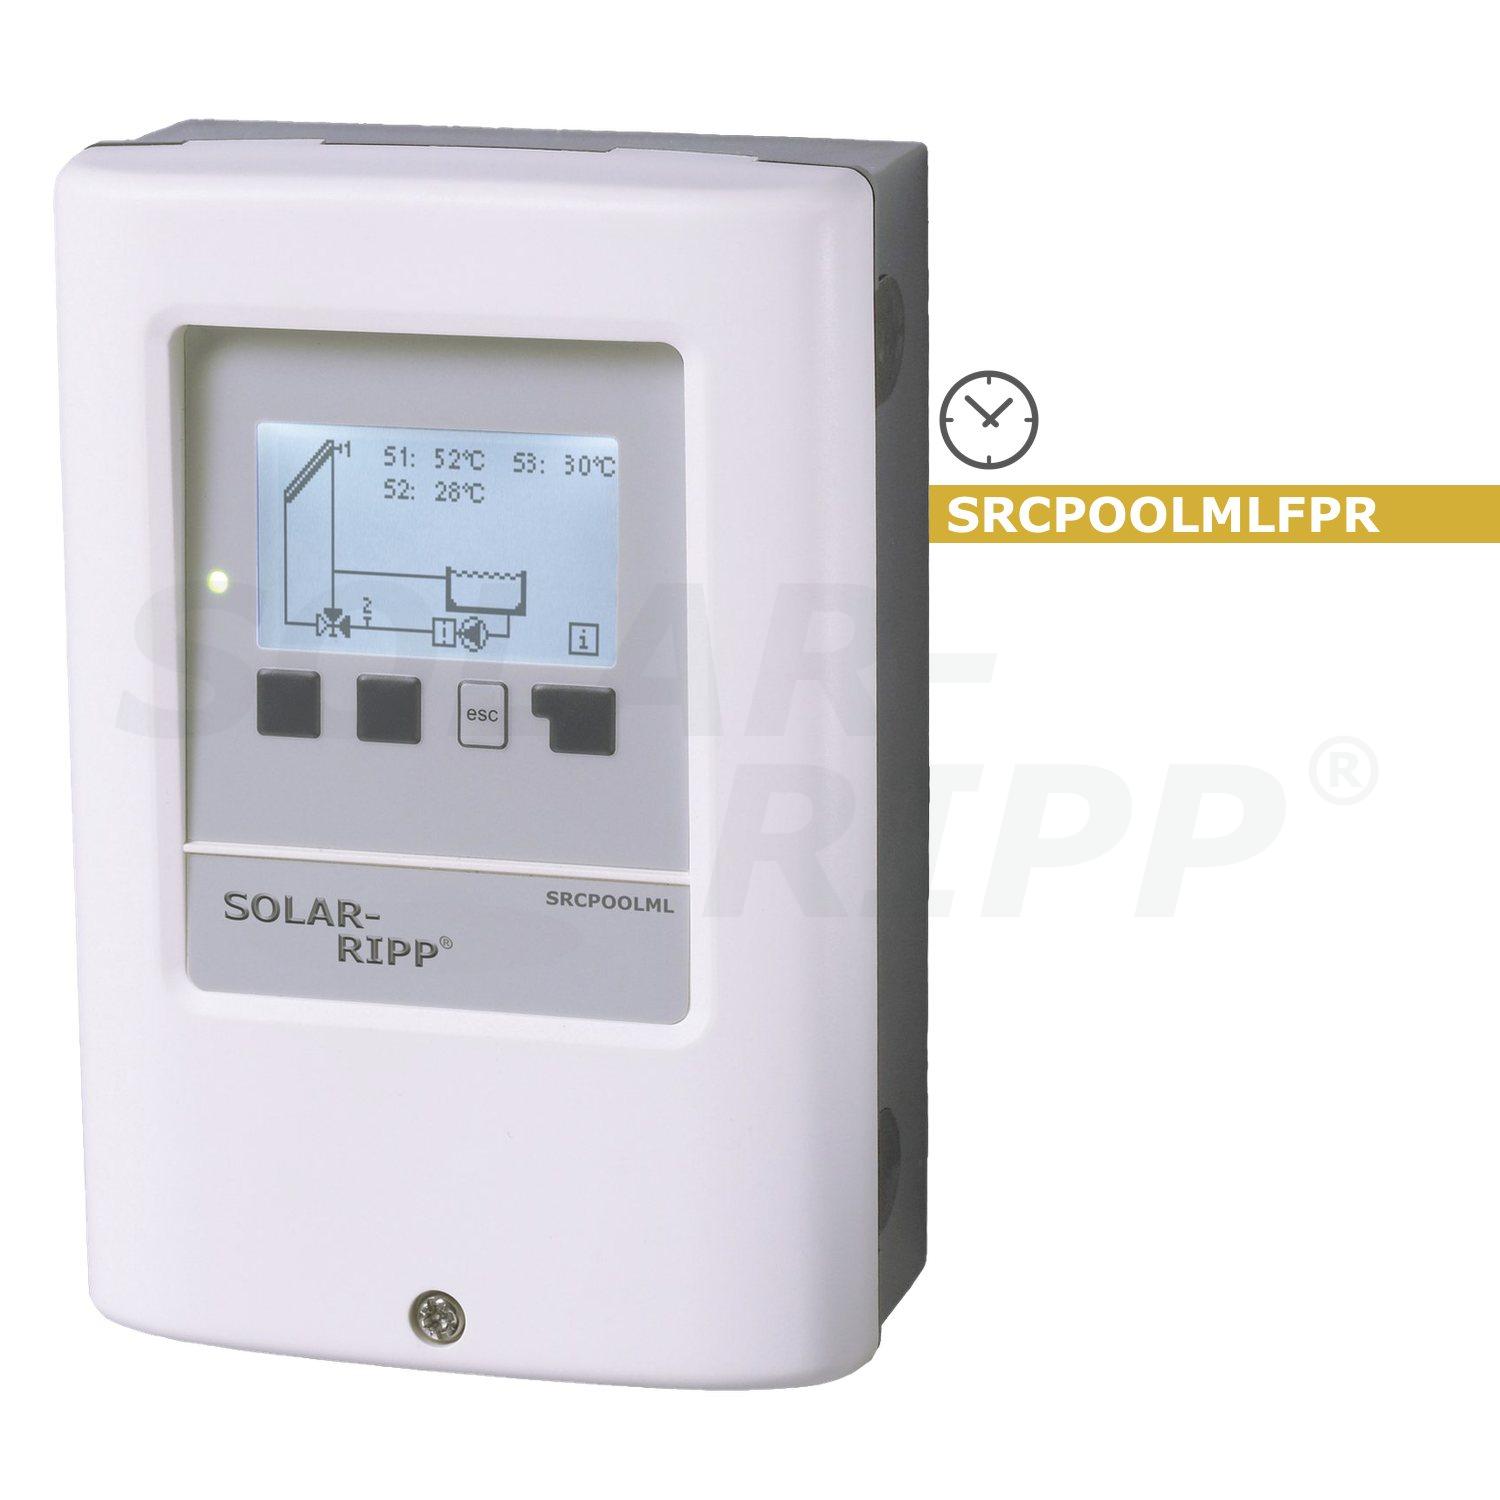 SOLAR-RIPP ® Solarcontroller SRCPOOLMLFPR